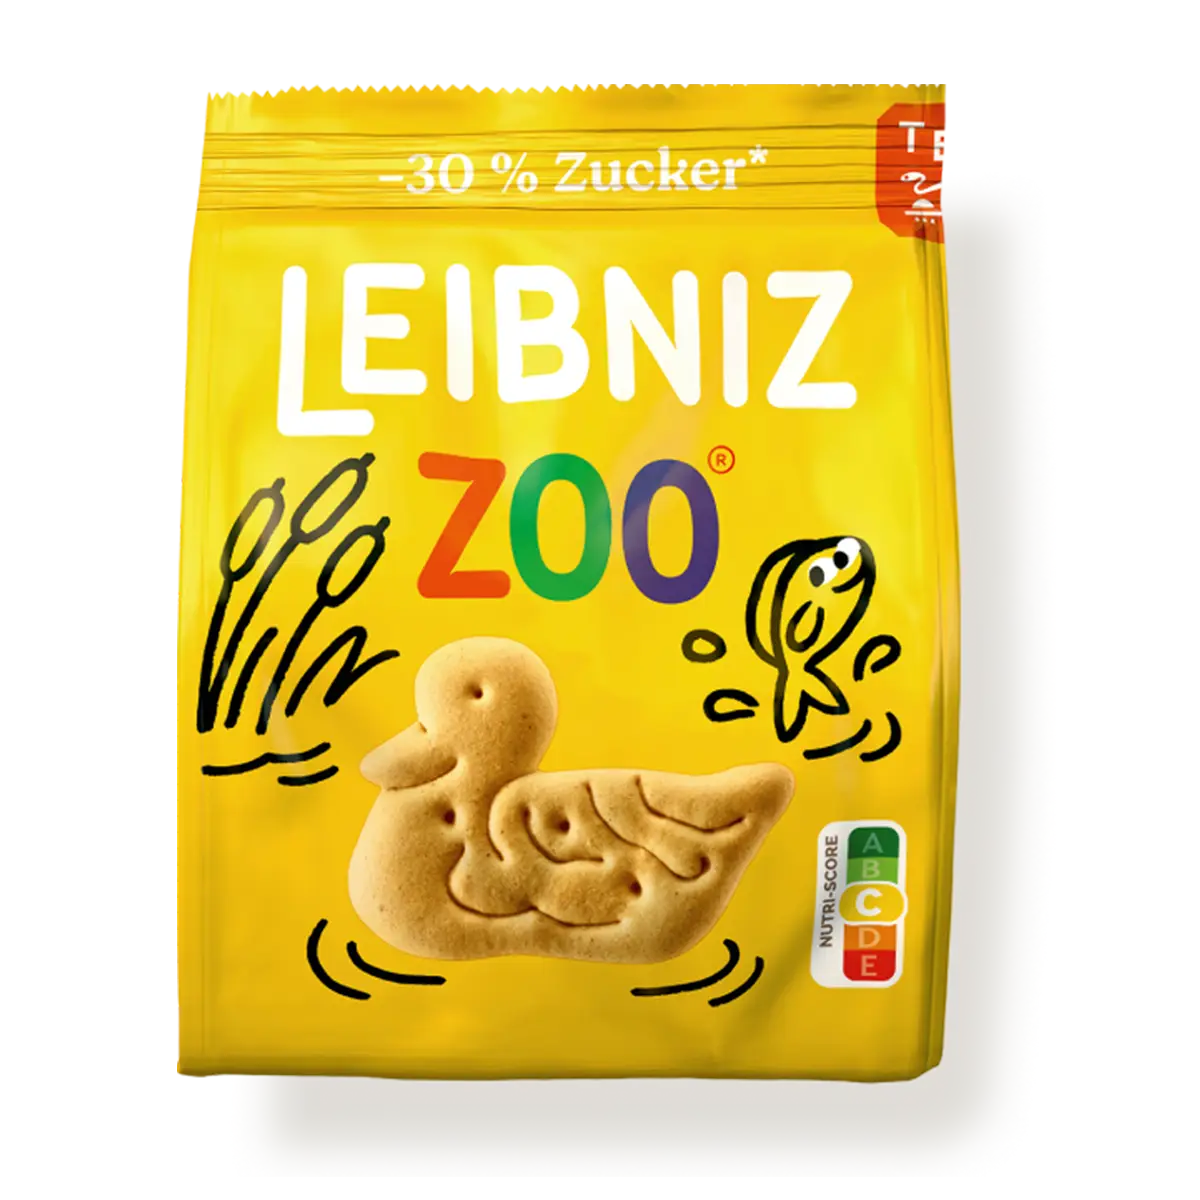 Leibniz Zoo -30% sugar, 125 g